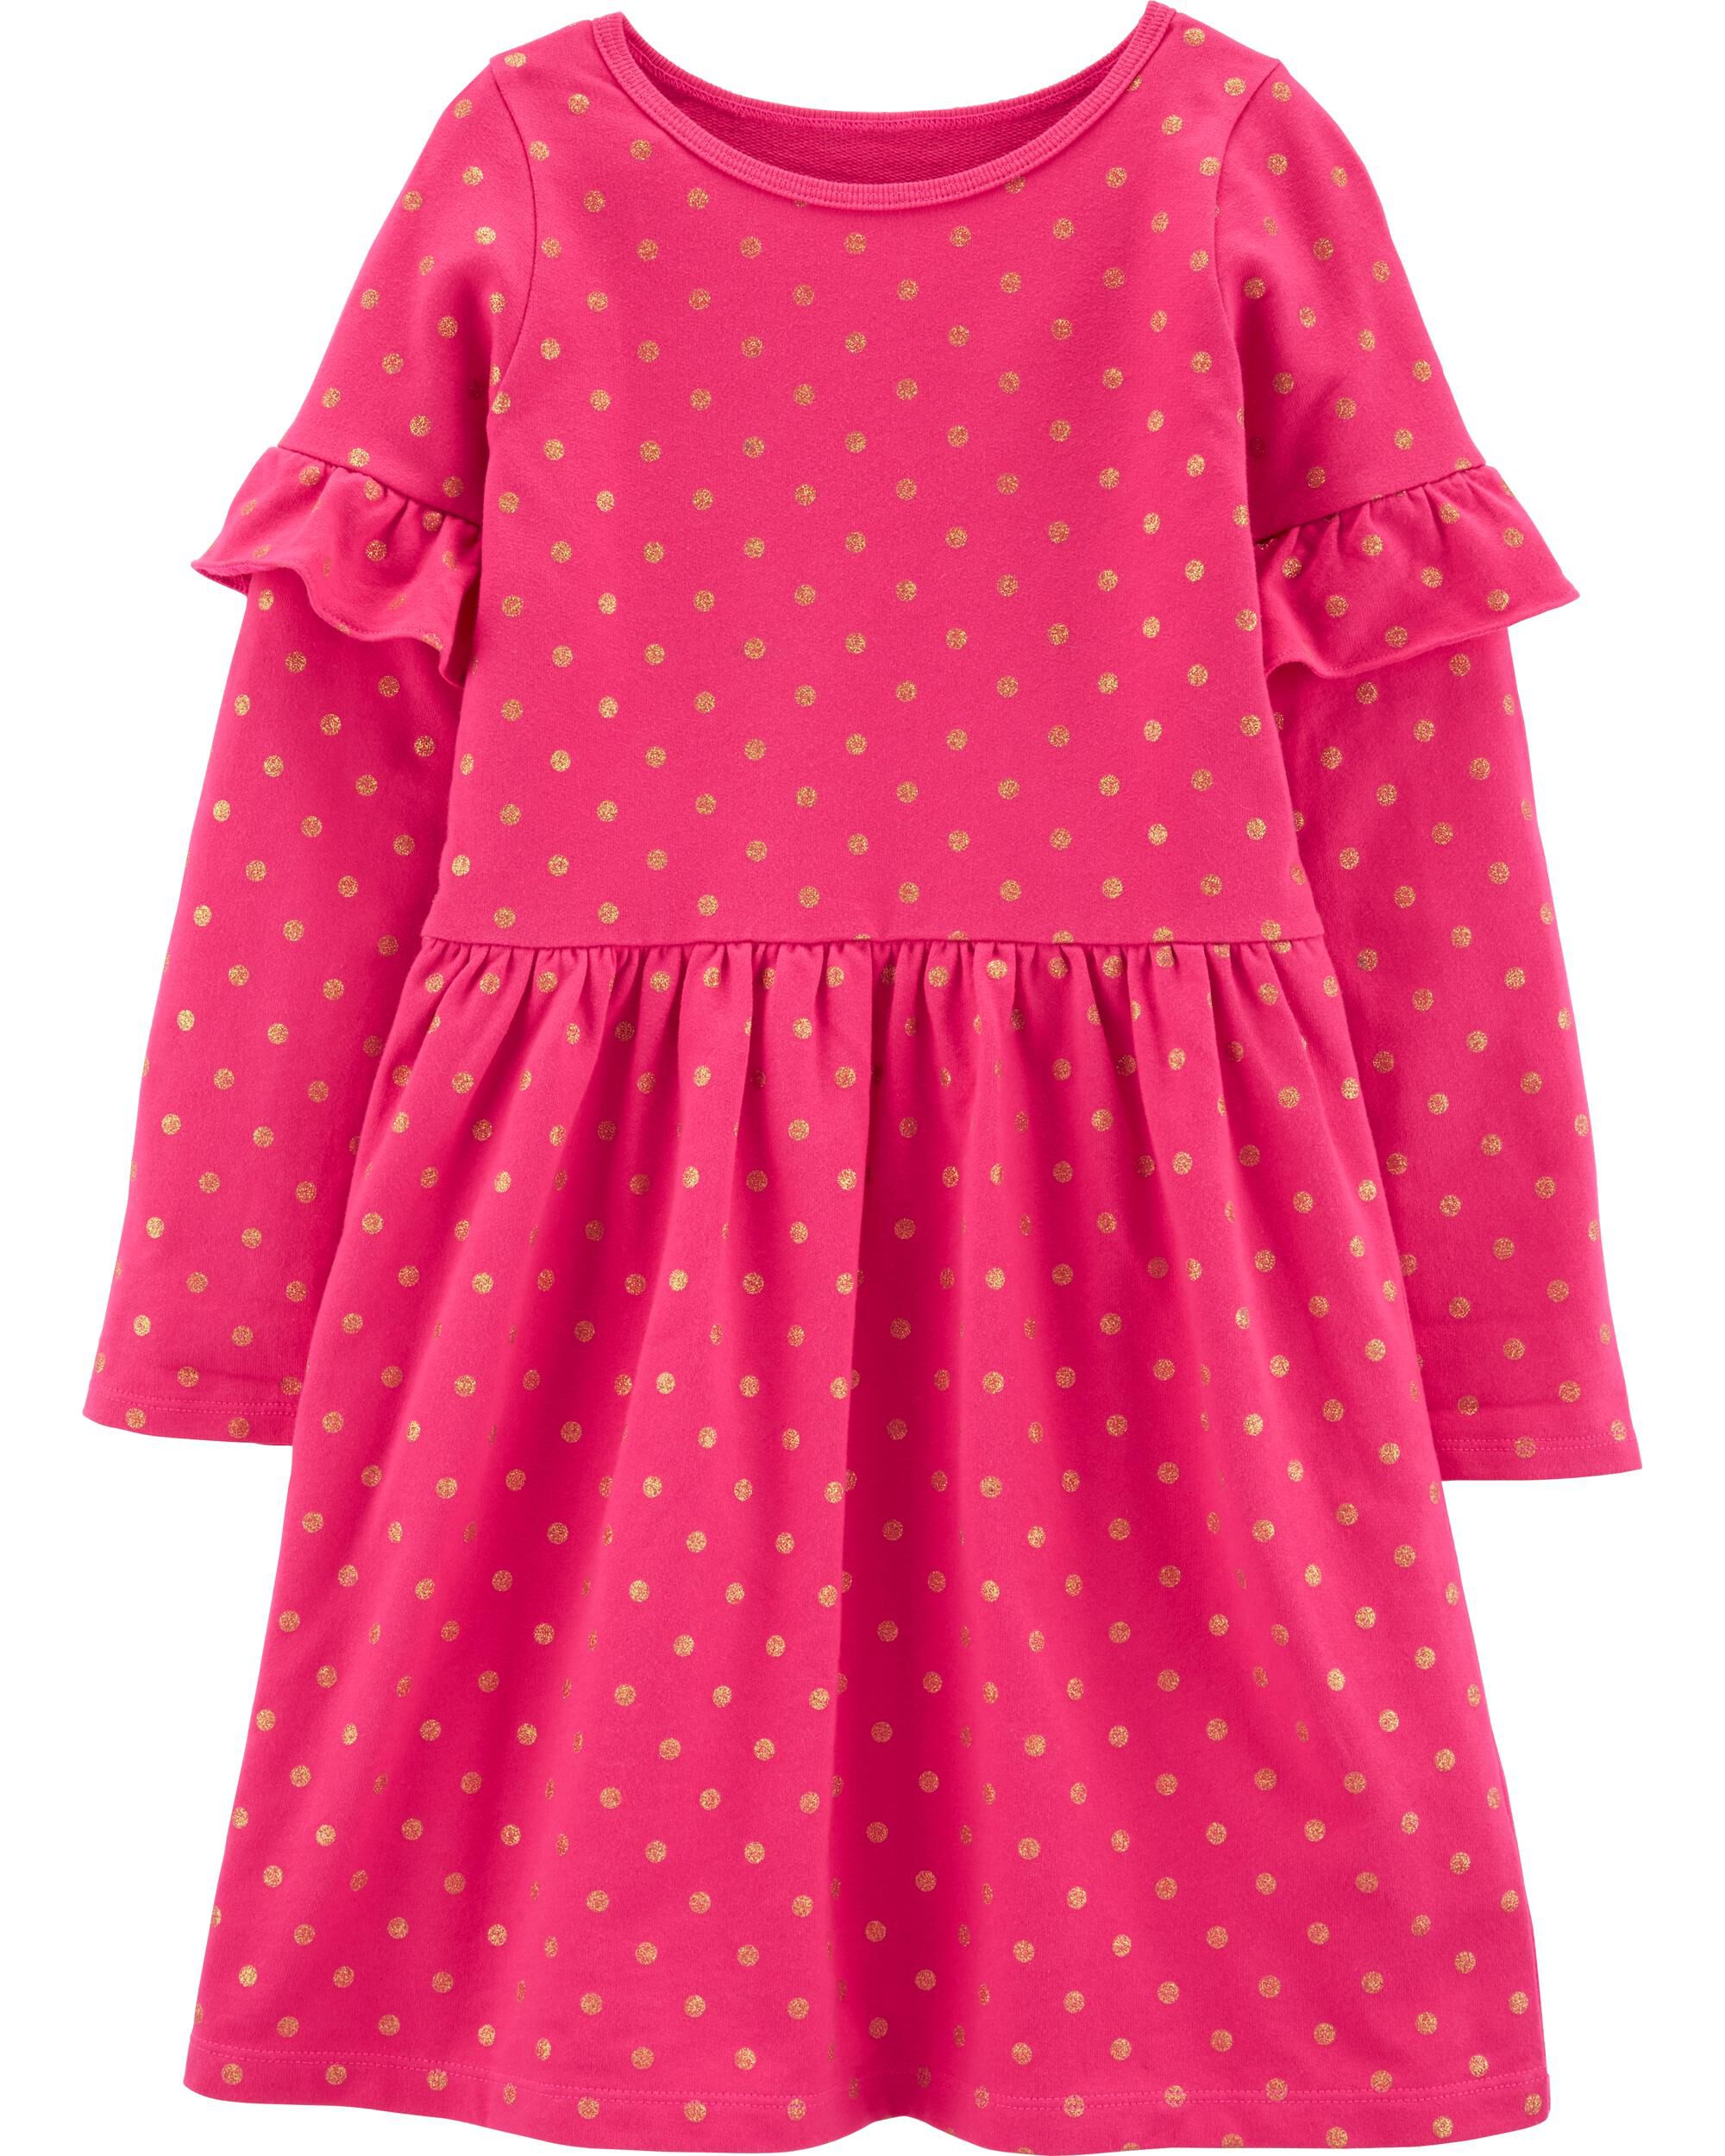 childrens pink polka dot dresses